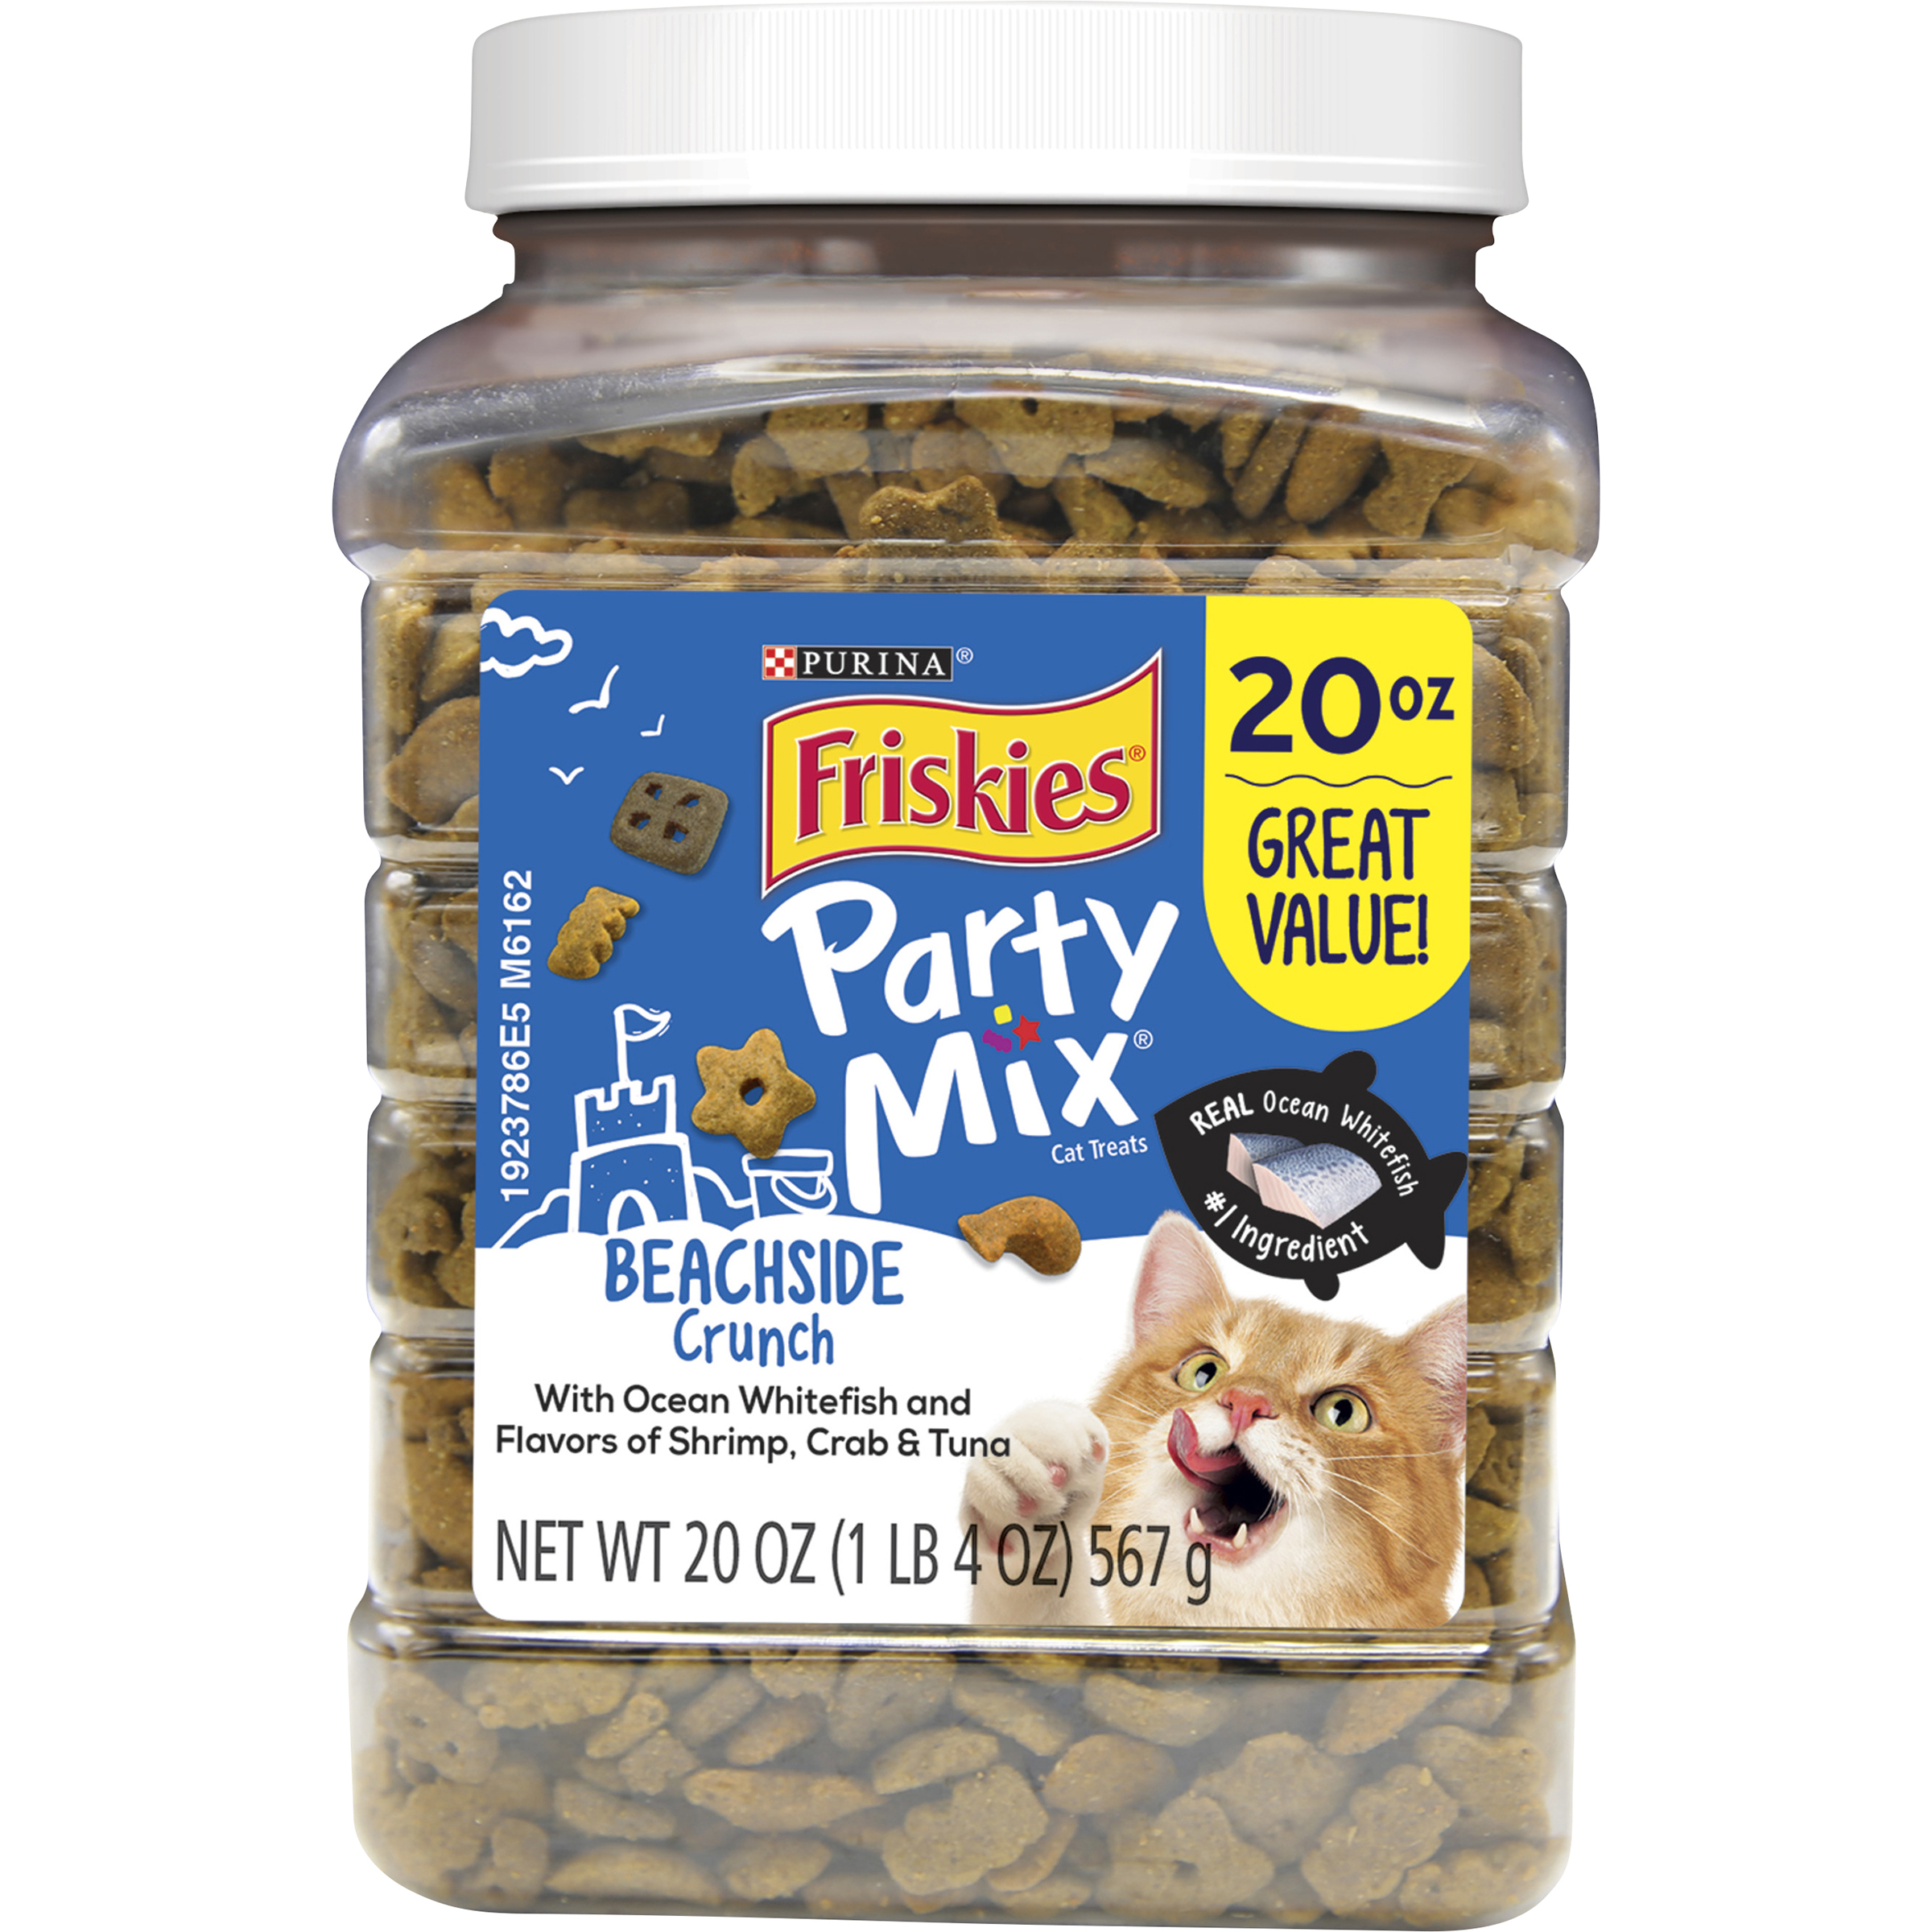 Friskies Party Mix Crunch Beachside Cat Treats 20 oz. Canister